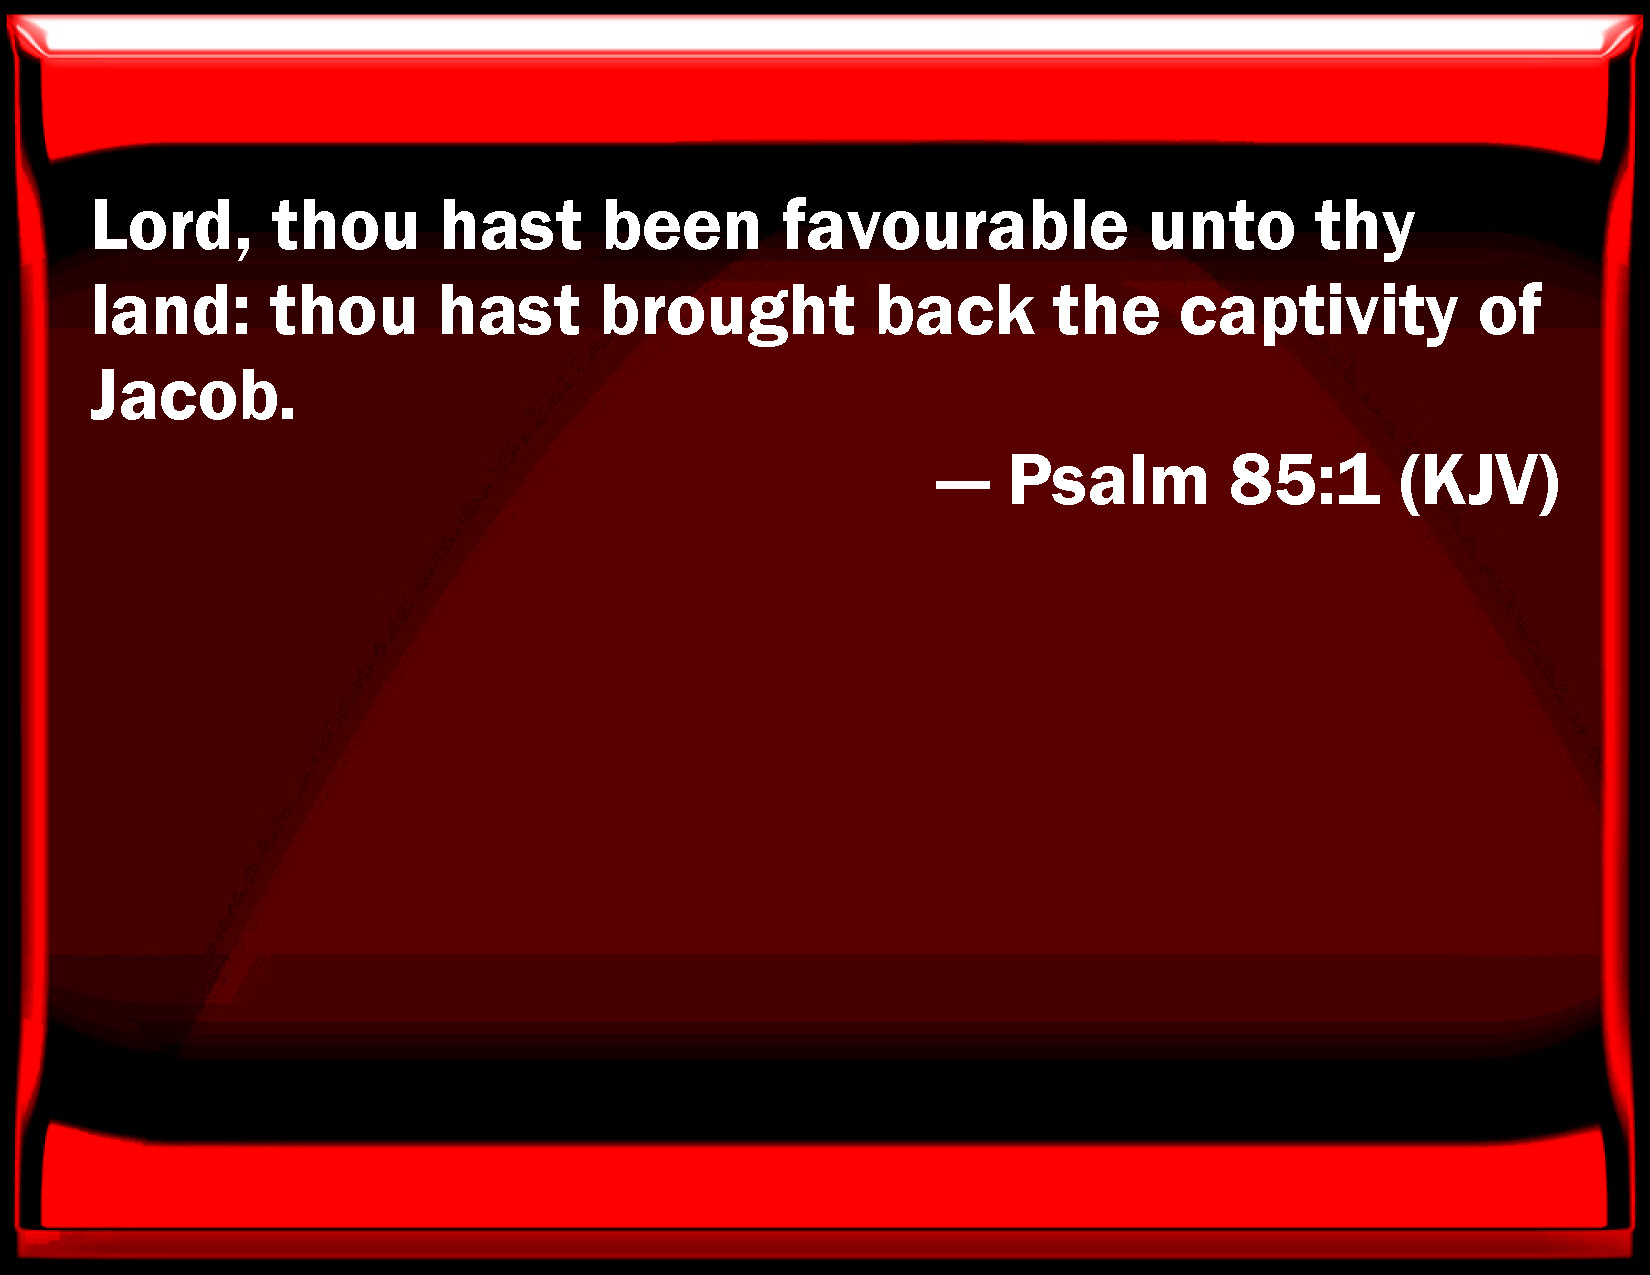 psalm 85